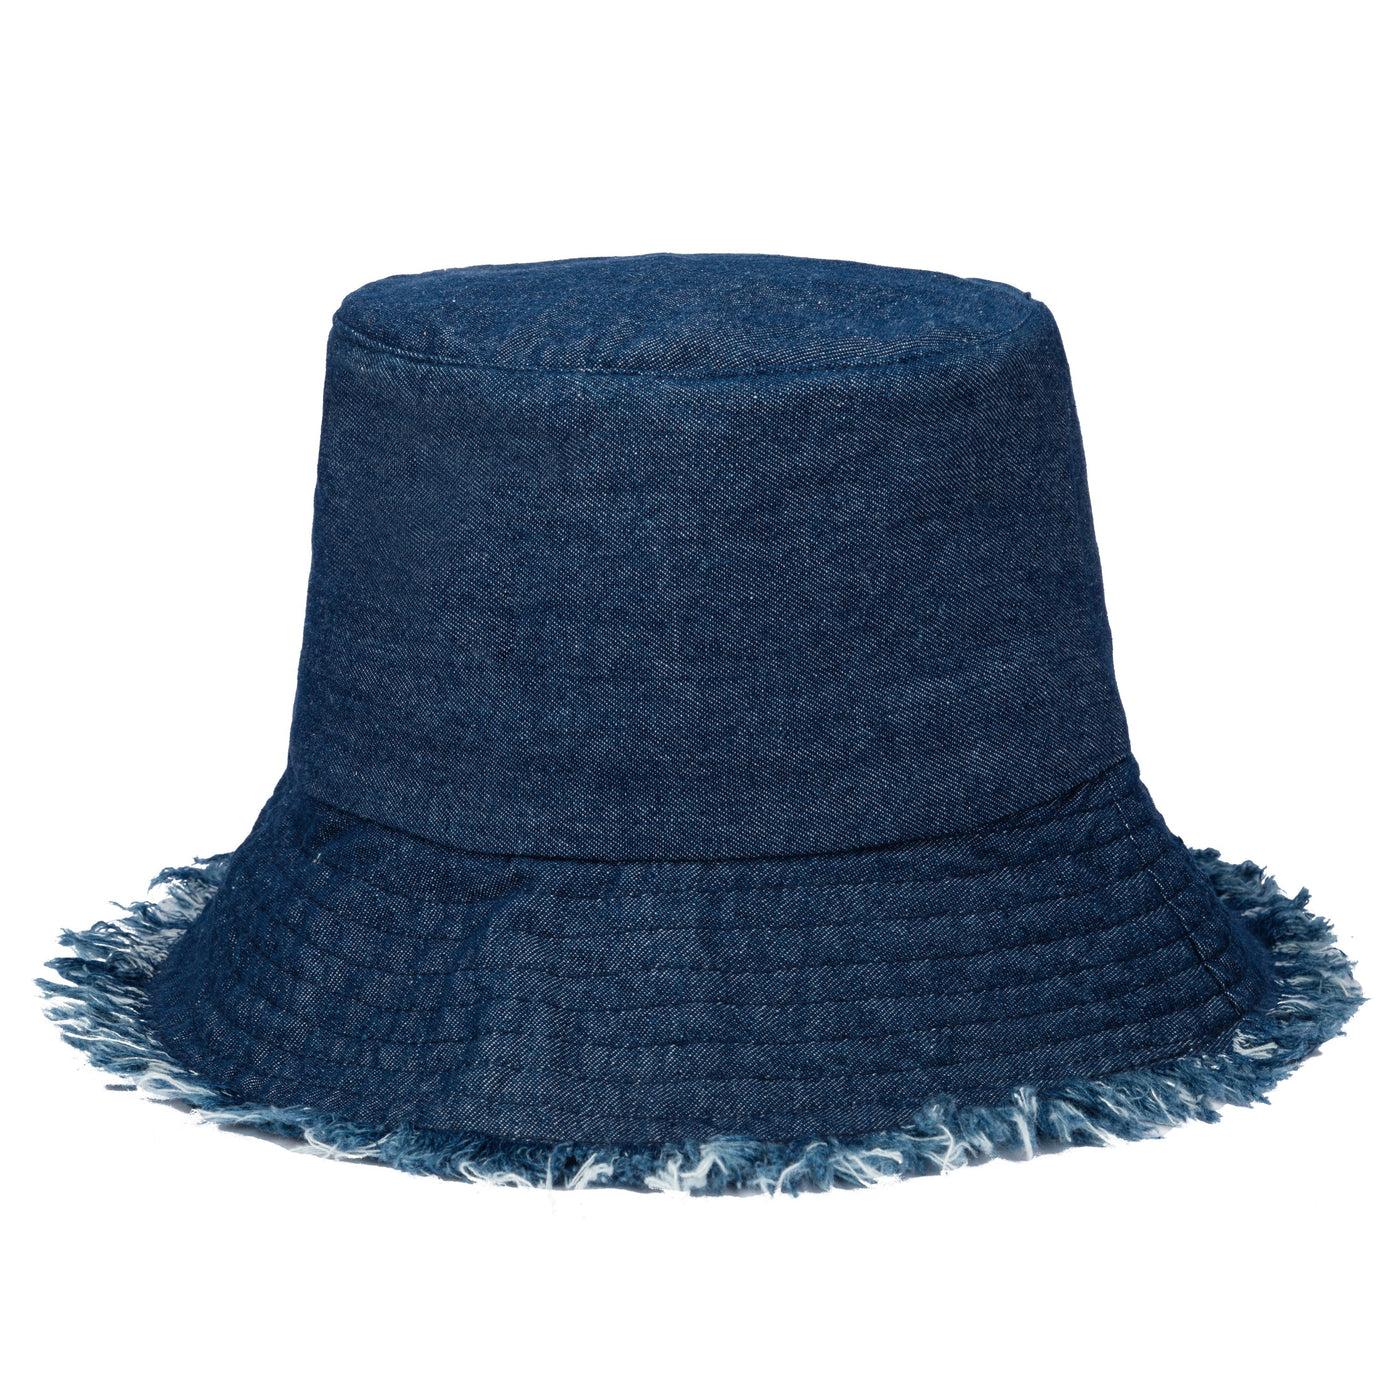 Vintage Style Denim Bucket Hats for Women Men Sun Protection for Travel  Pool | eBay